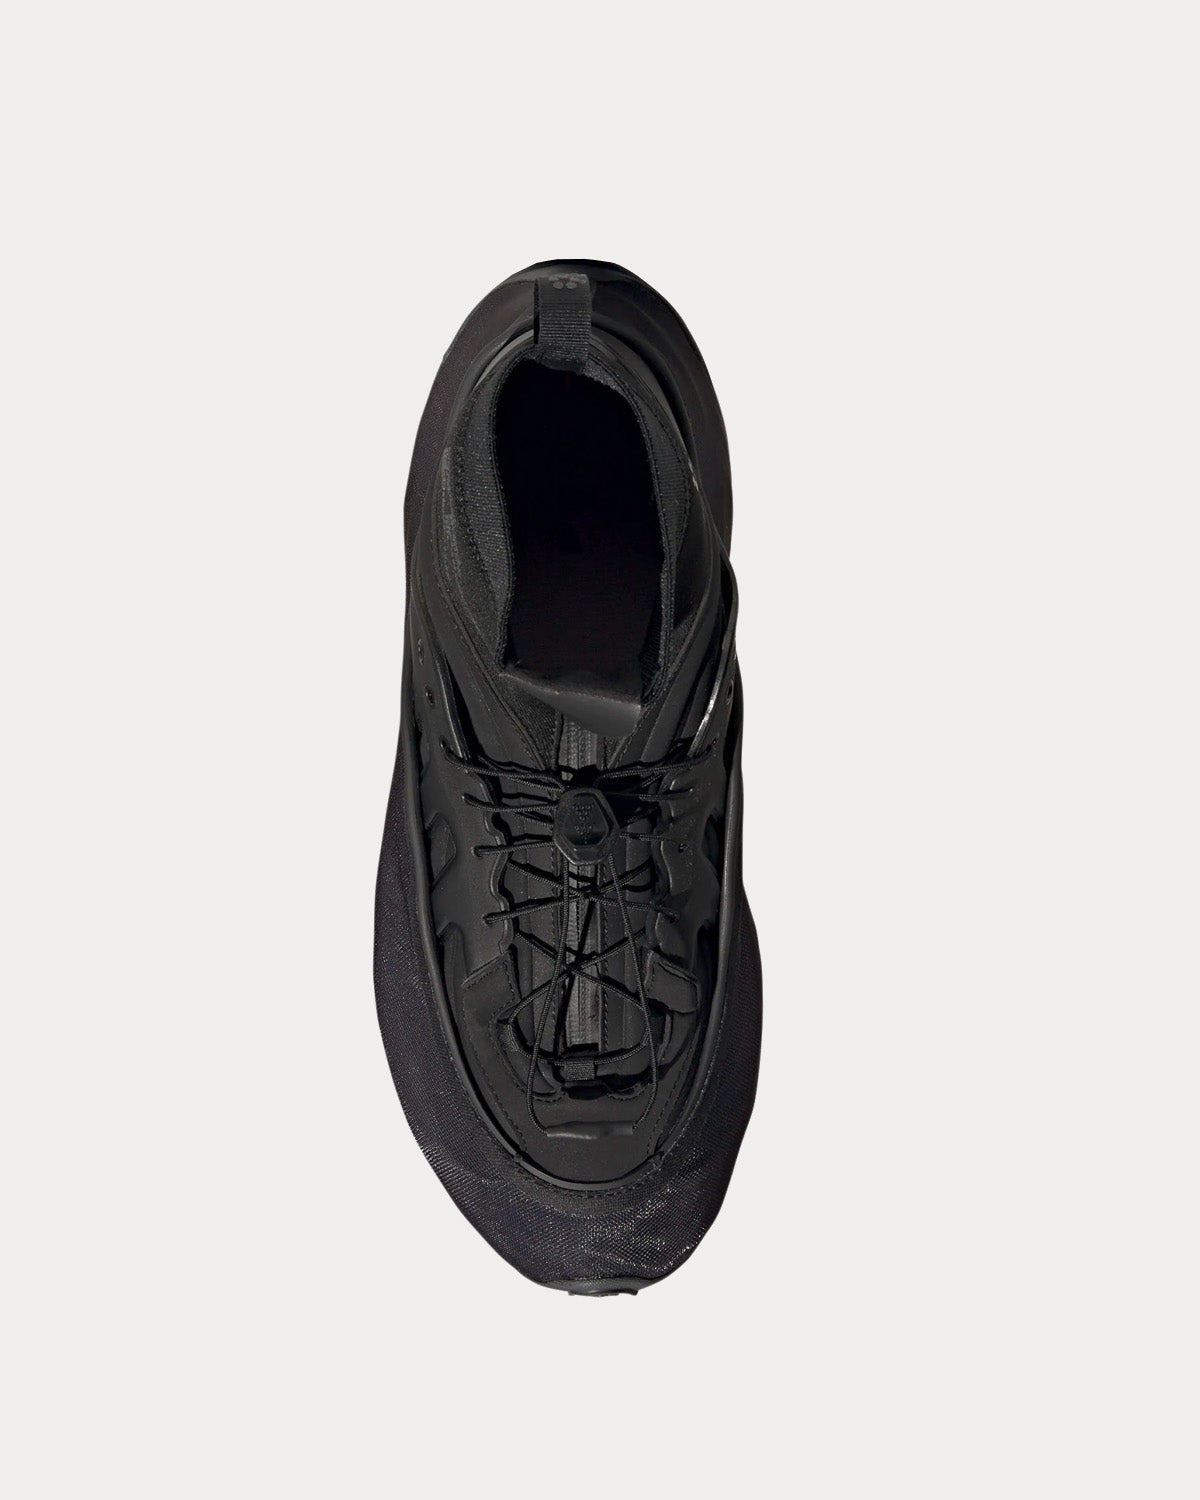 Adidas x Mr Bailey - Ozmorphis Core Black / Grey Six / Core Black High Top Sneakers